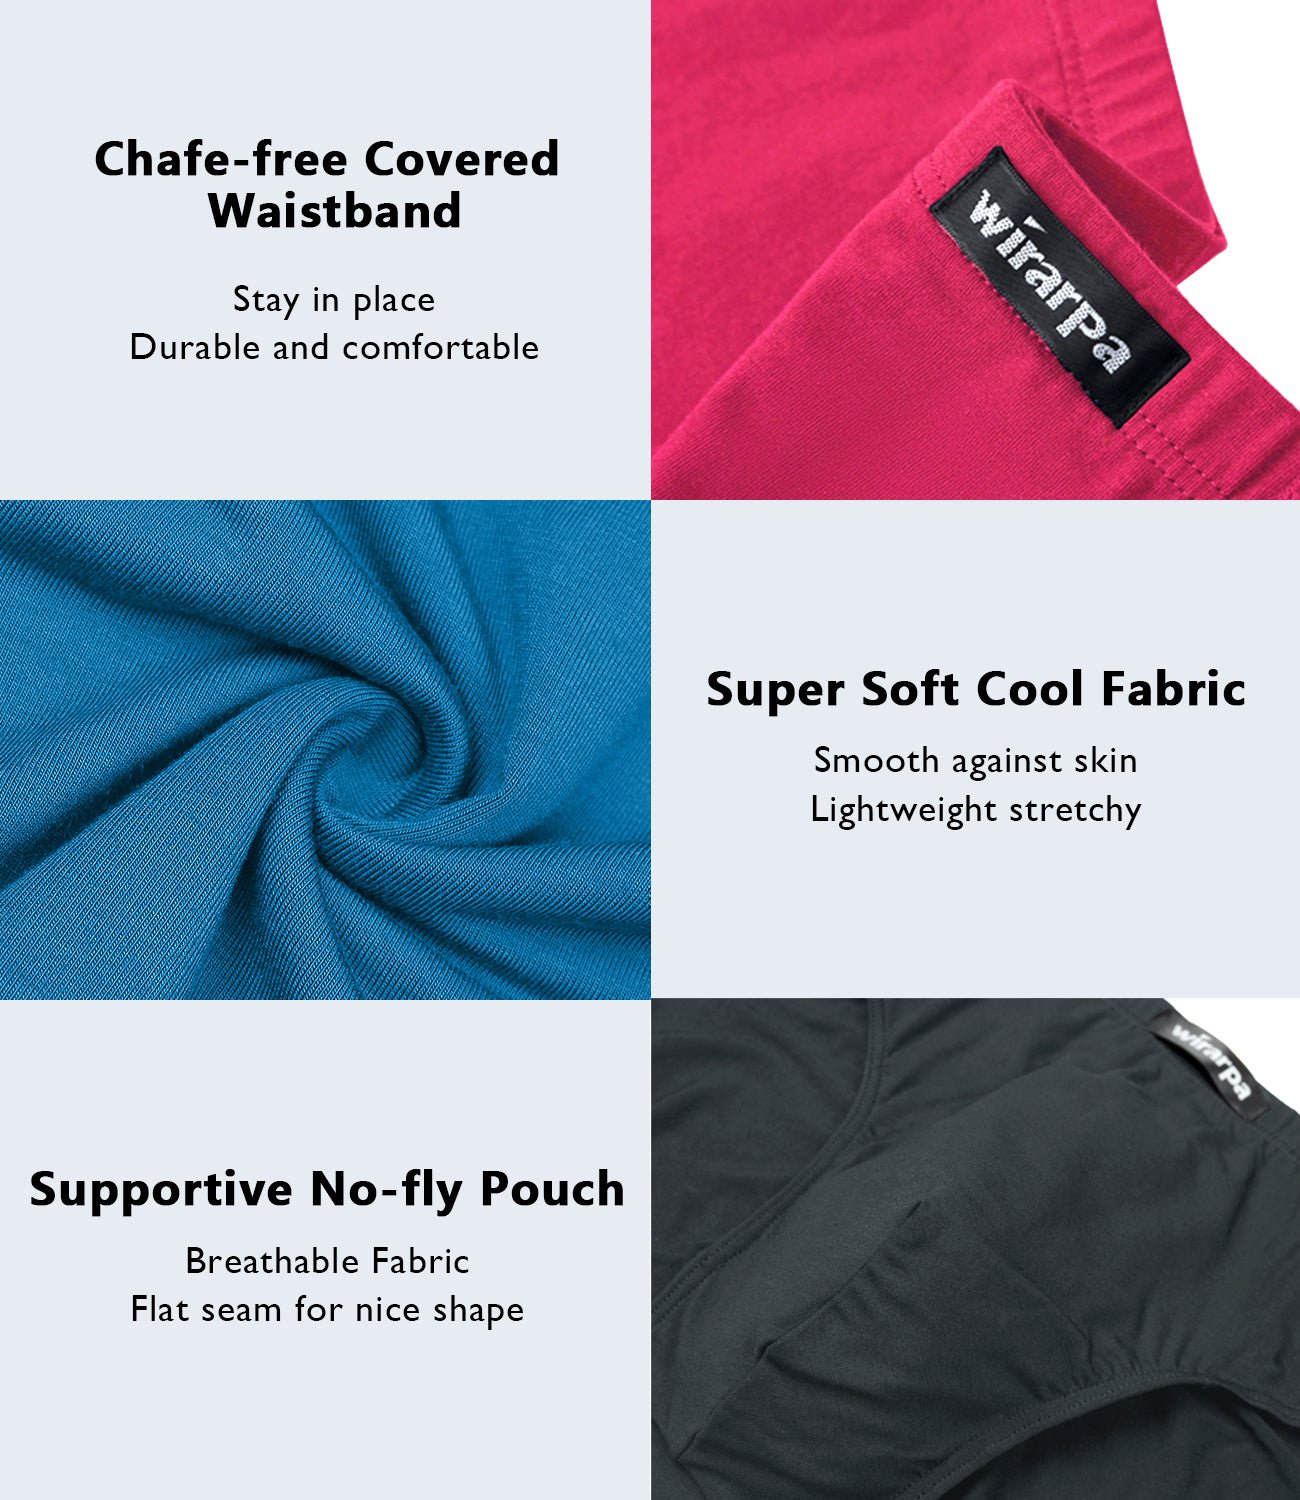 wirarpa Men’s Ultra Soft Silky Touch Viscose Underwear Briefs 4 Pack - Wirarpa Apparel, Inc.